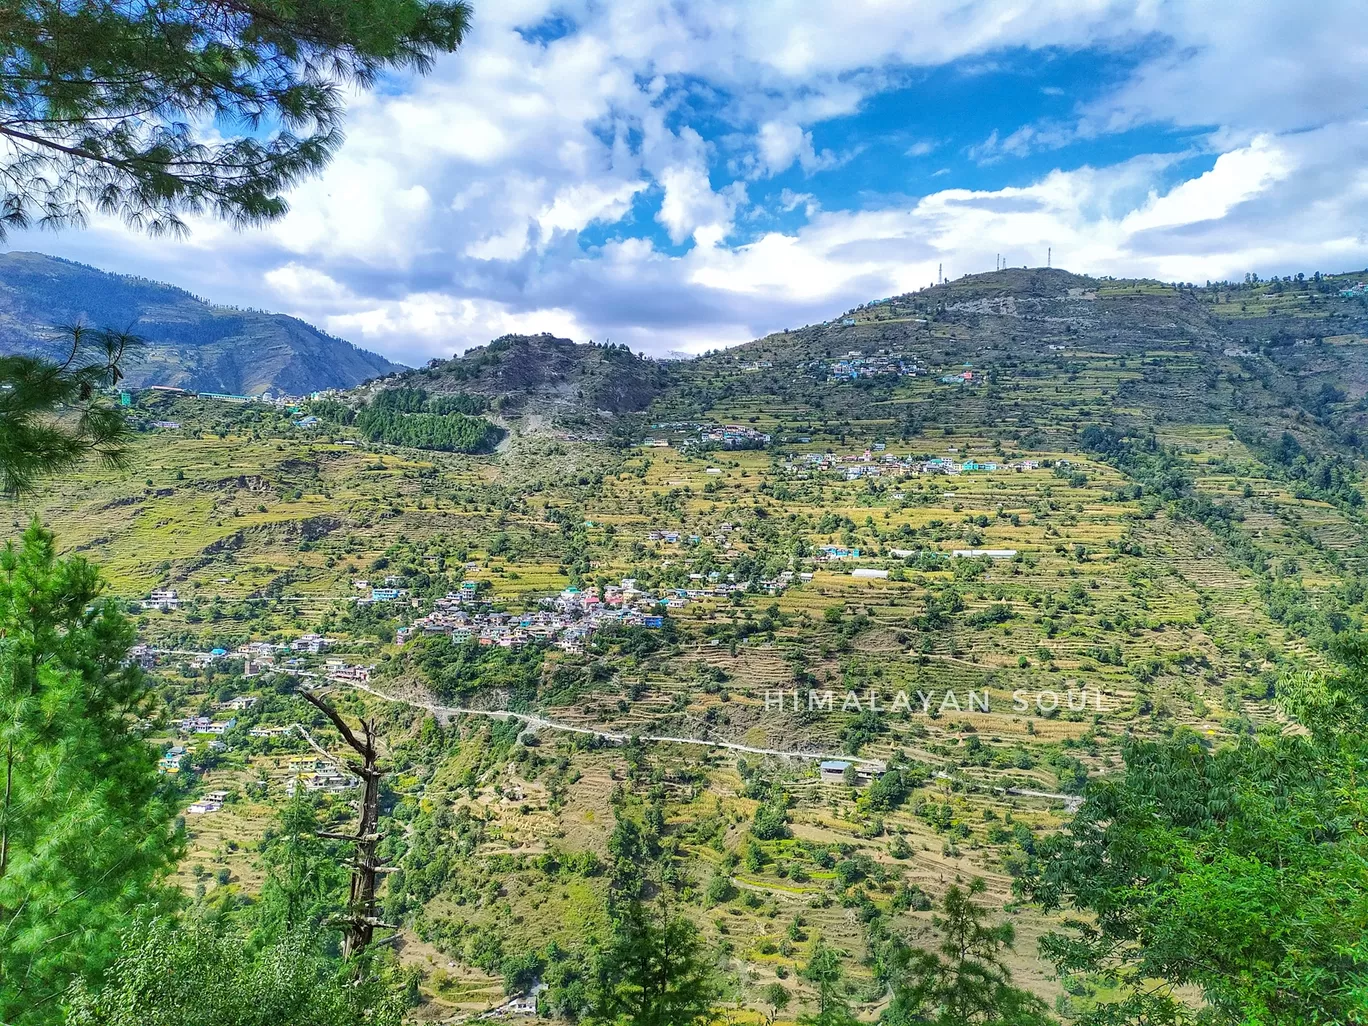 Photo of Himachal Pradesh By Himalayan soul